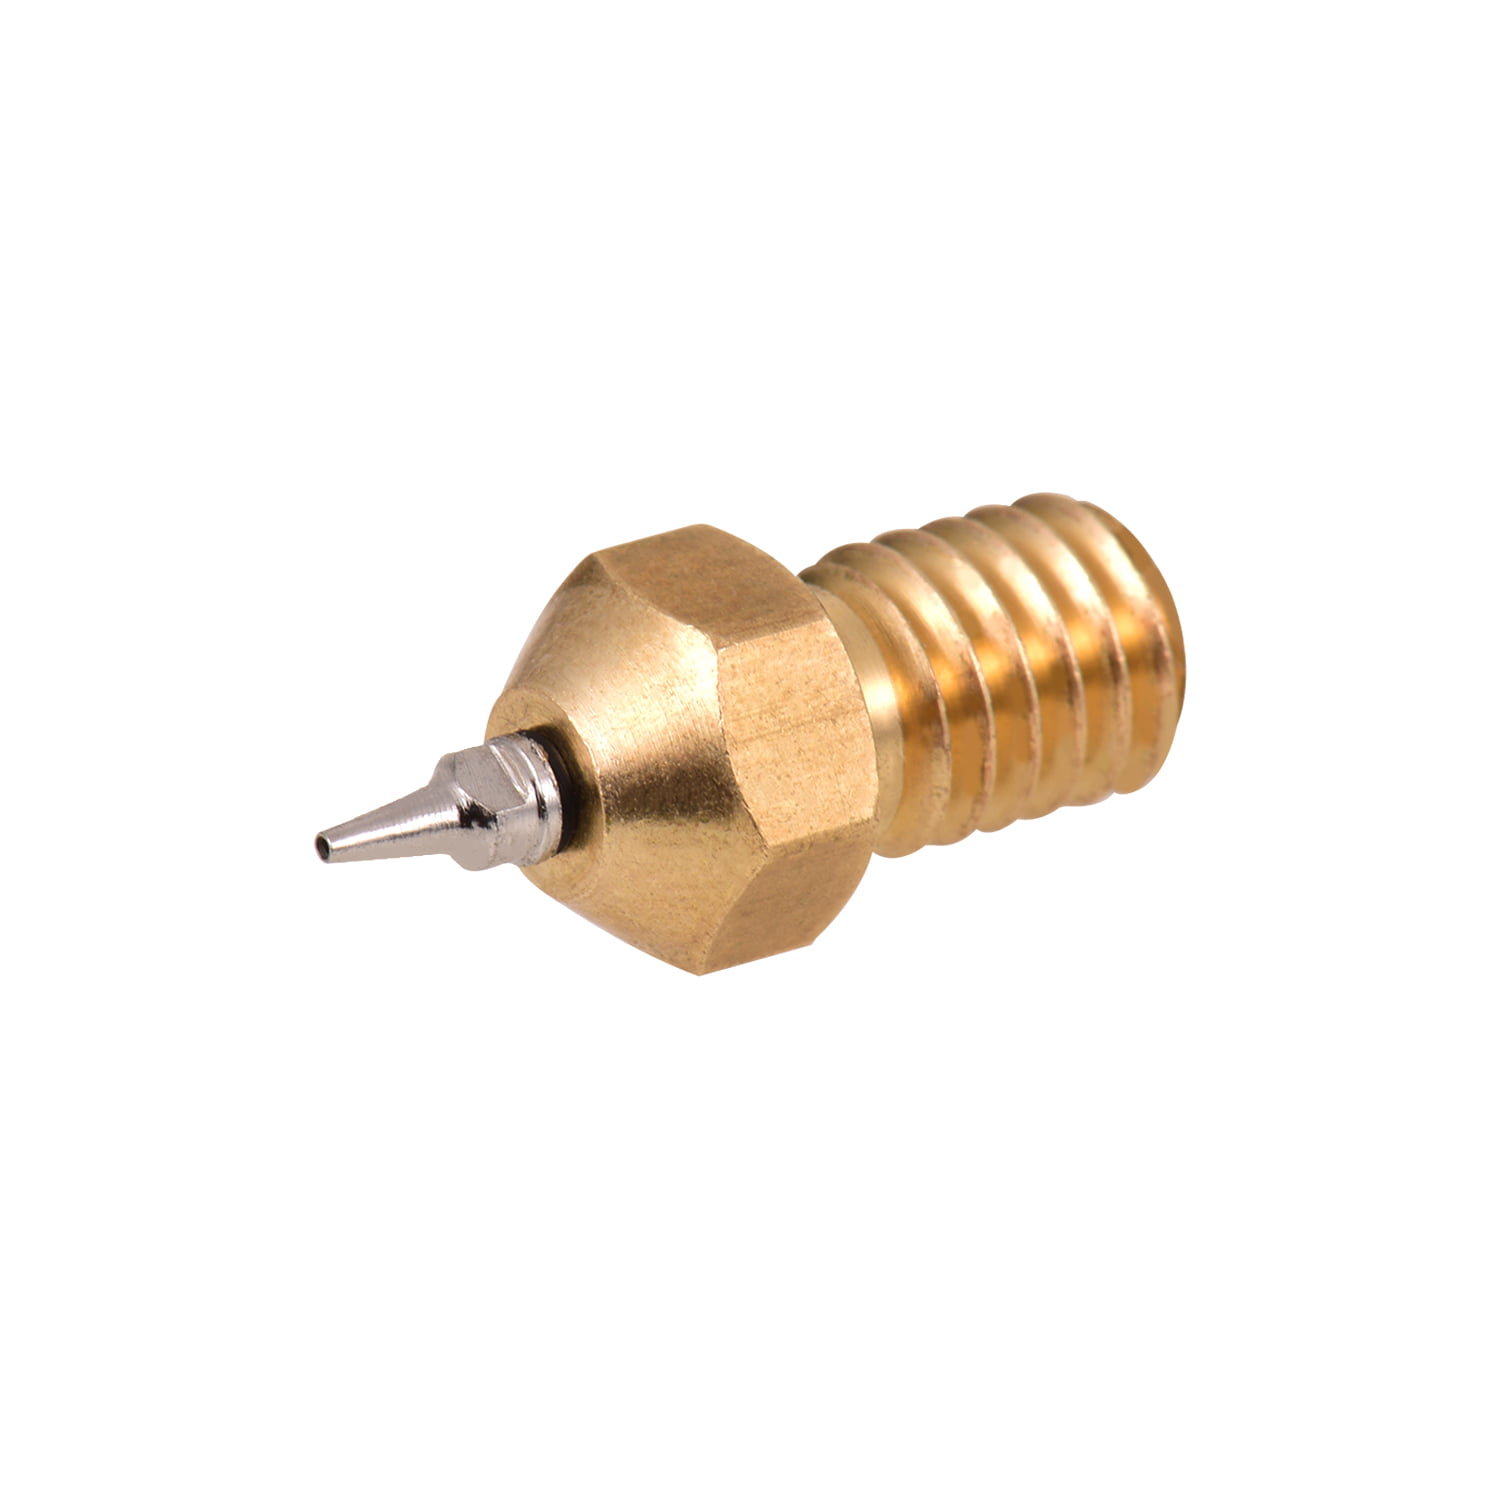 3D Printer Brass Nozzle Fit 1.75 Filament 0.2mm 0.3mm 0.4mm to 0.5mm M6 Thread 